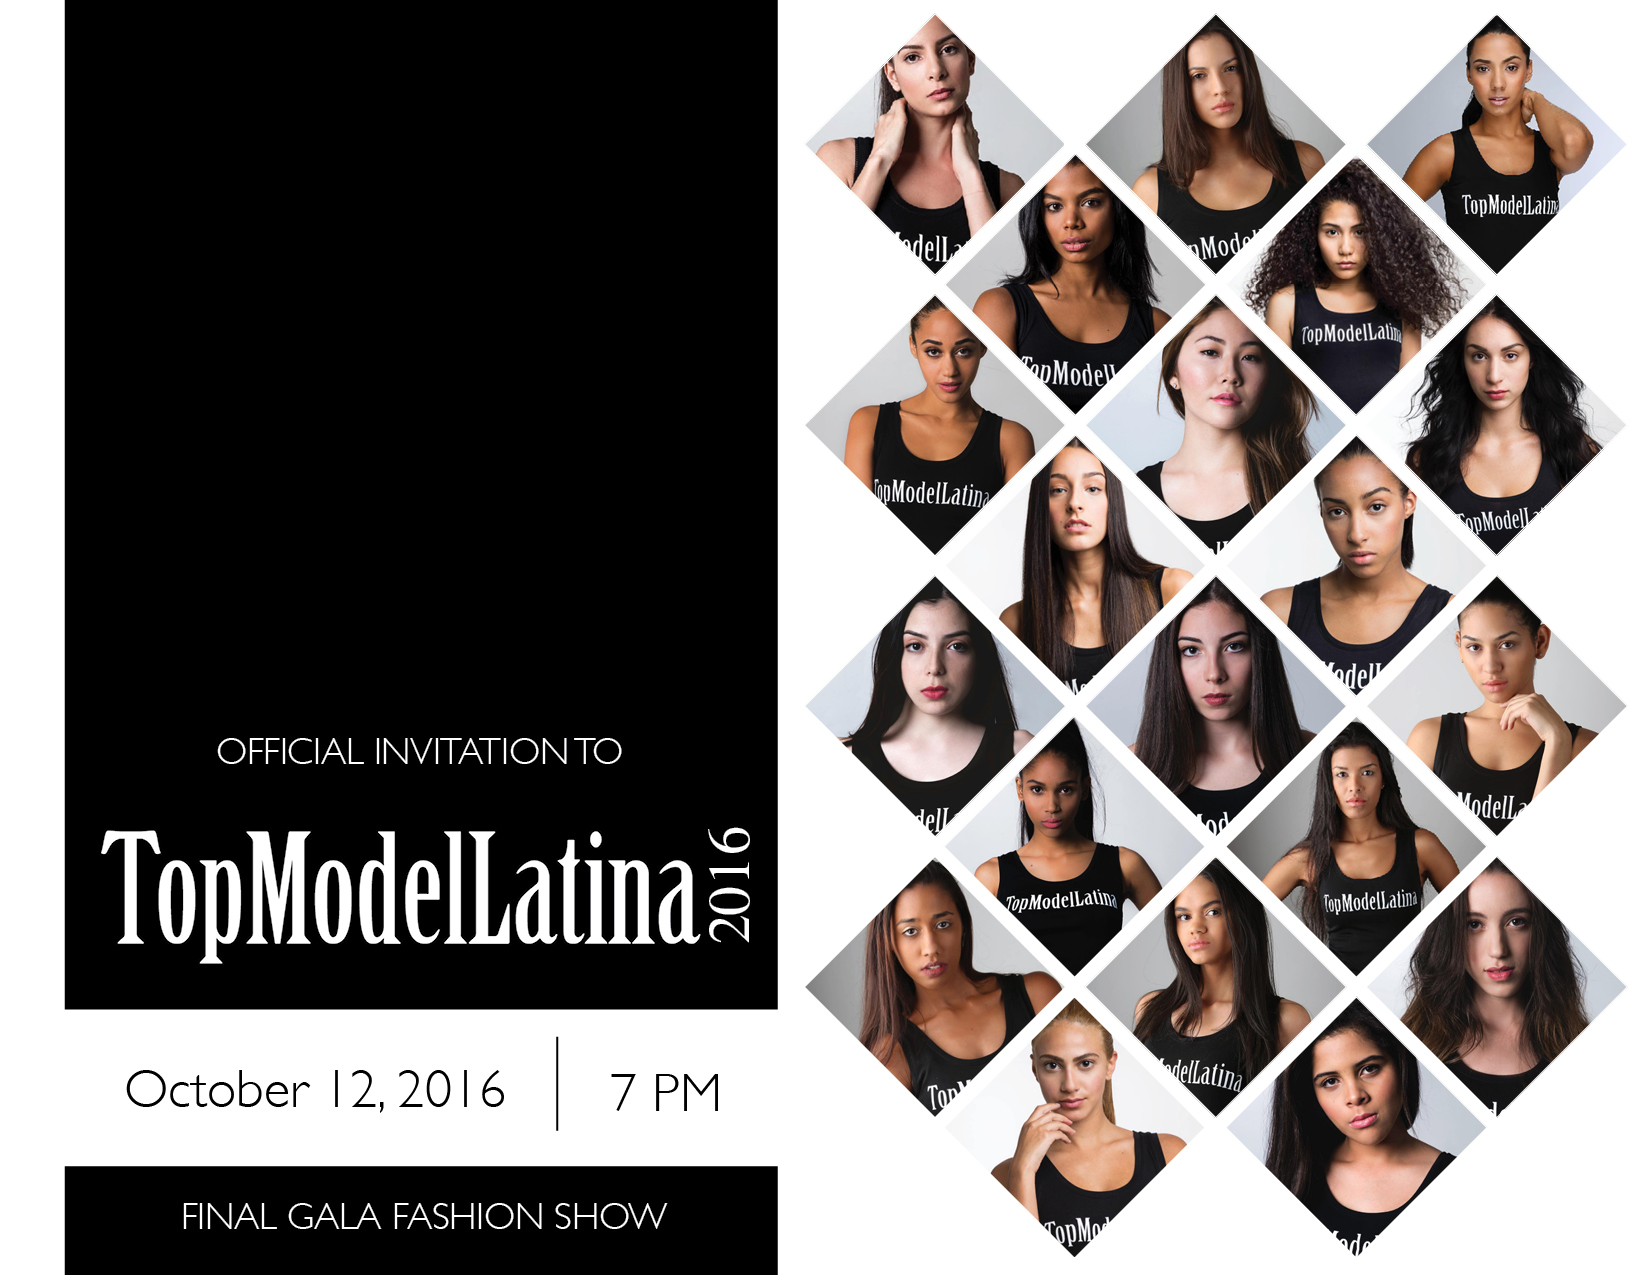 Top Model Latina invitation card